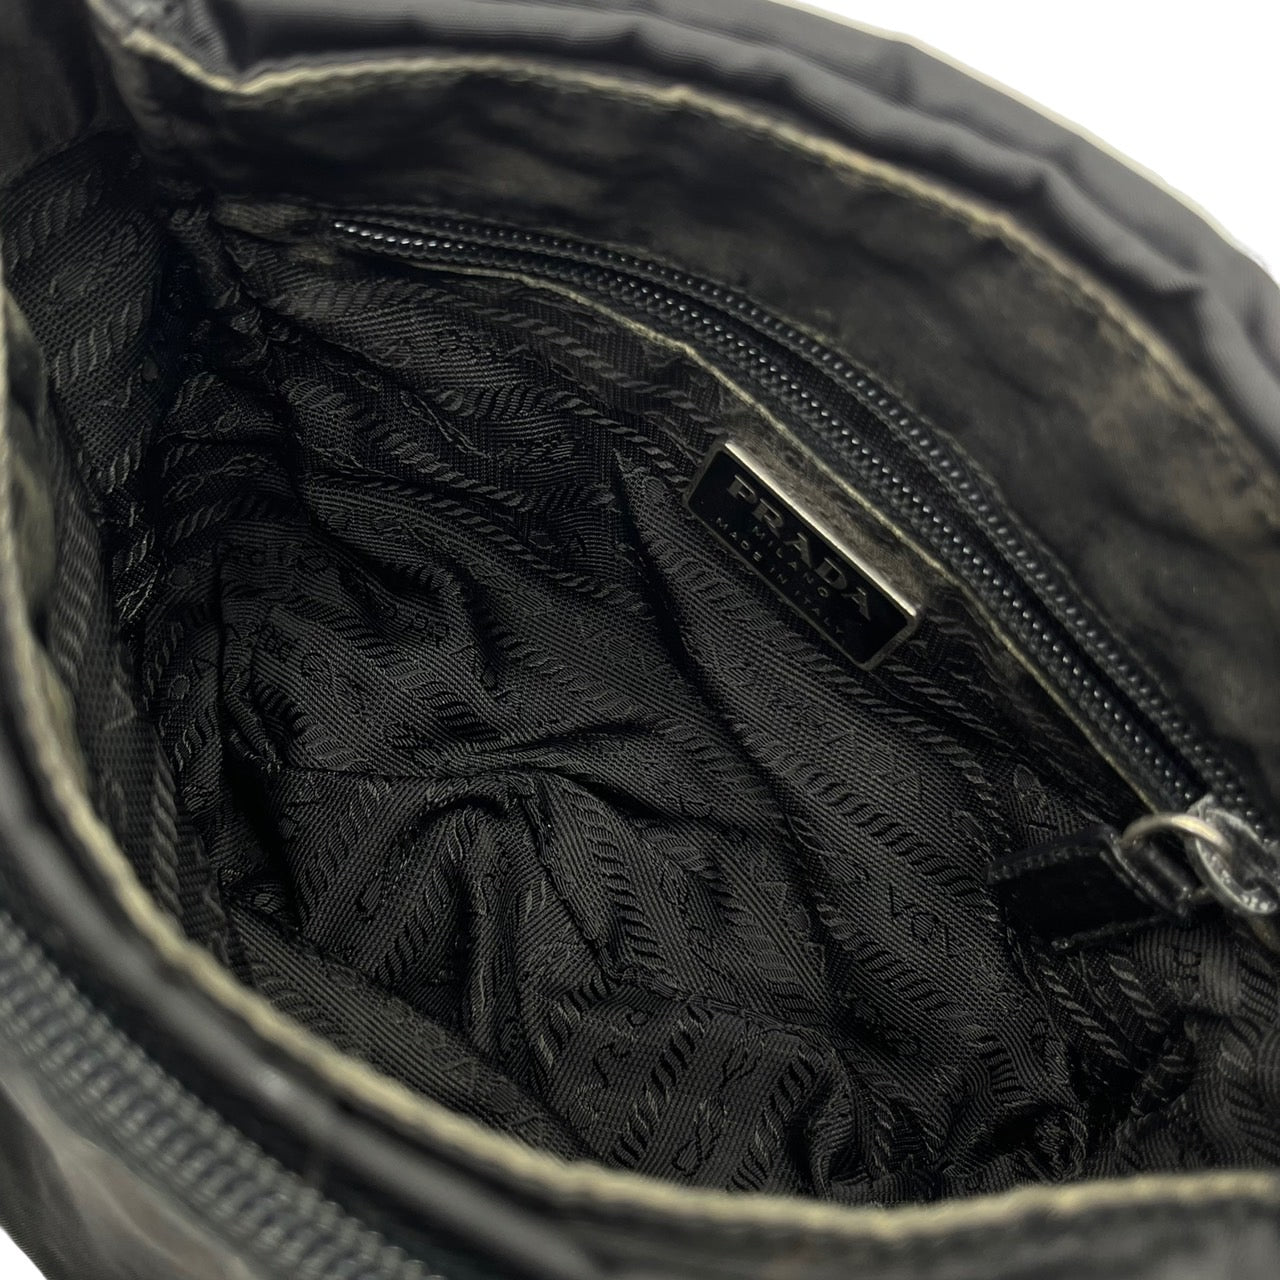 PRADA(プラダ) old nylon shoulder pouch/オールドナイロンショルダーポーチ/三角プレート/バッグ ブラック 全体使用感有